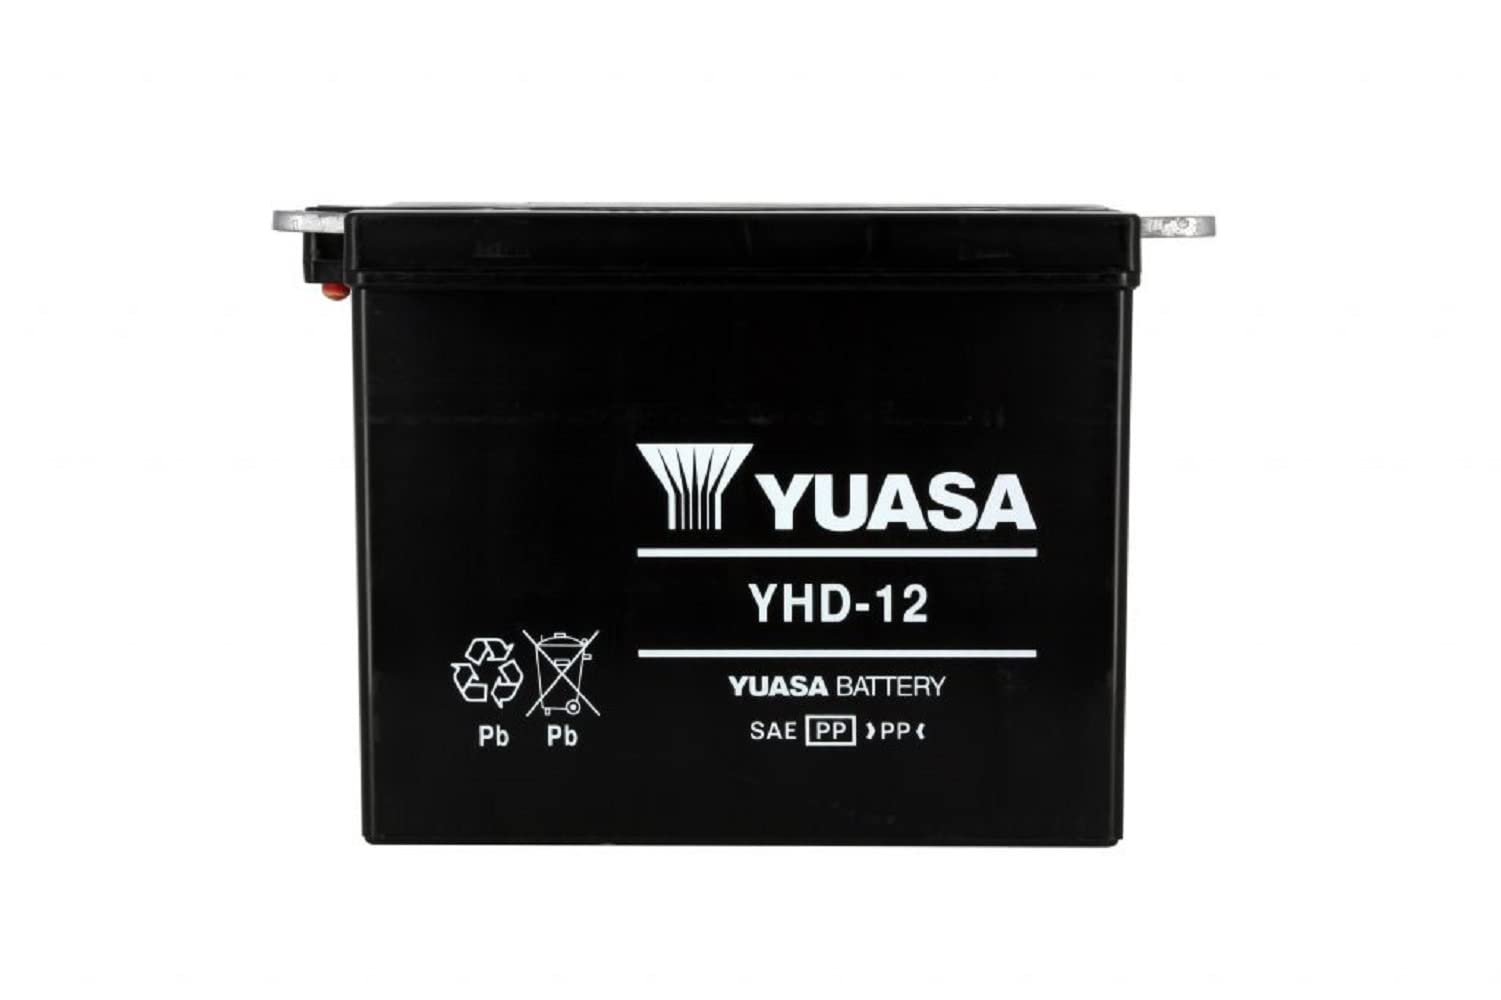 YUASA BATTERIE YHD-12 offen ohne Saeure von Yuasa